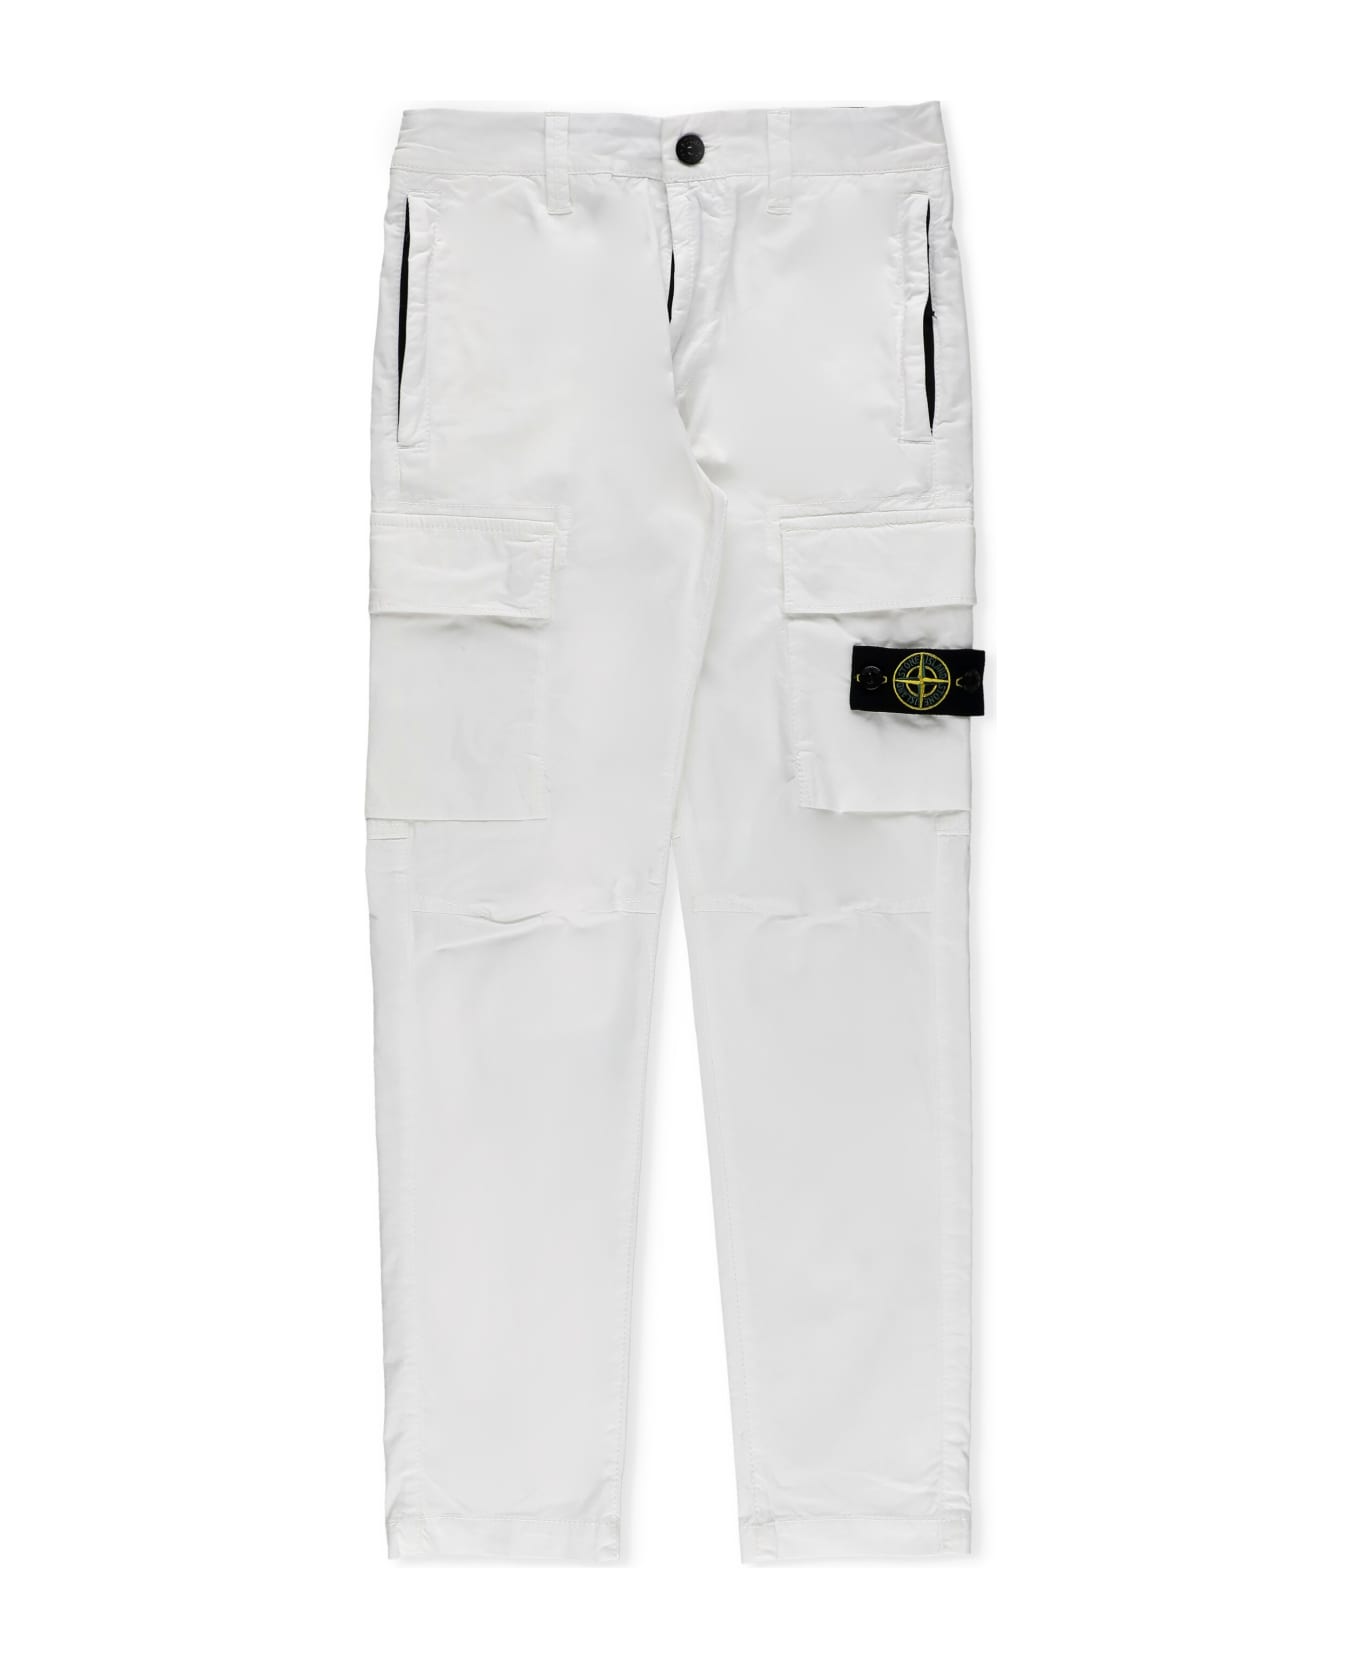 Stone Island Cotton Cargo Pants - White ボトムス